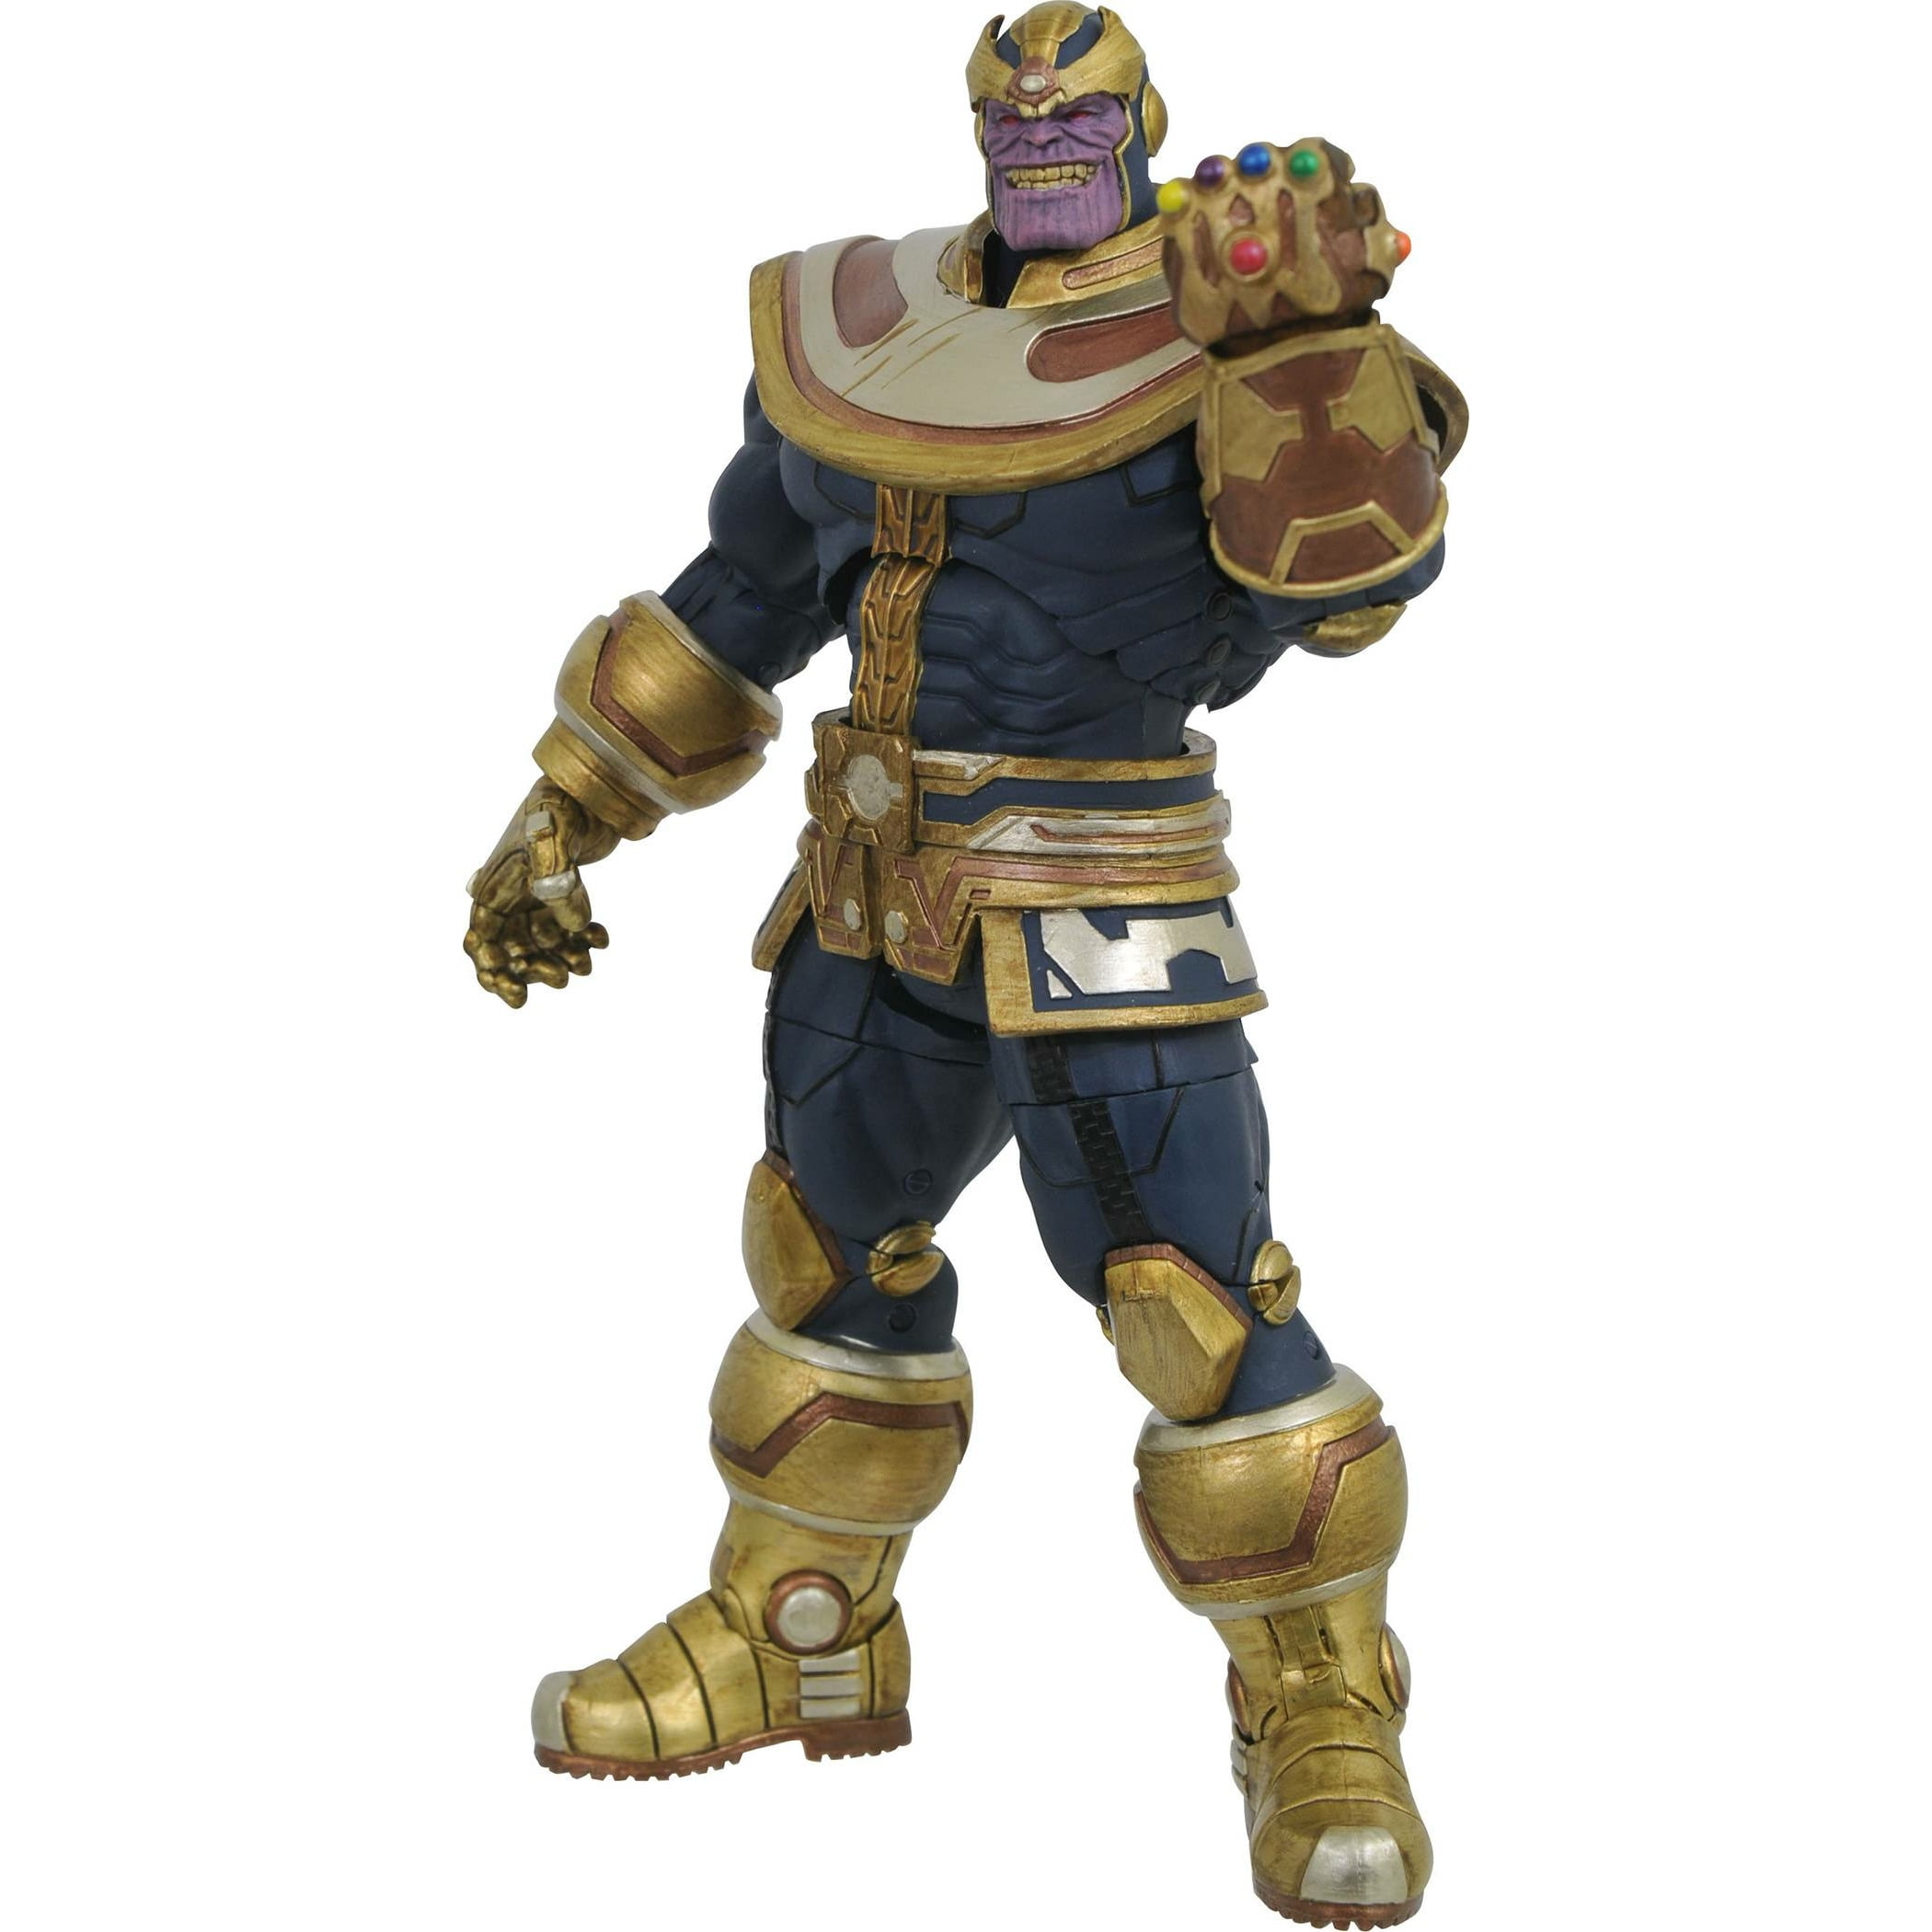 Diamond Select Toys Marvel Select Thanos Action Figure 